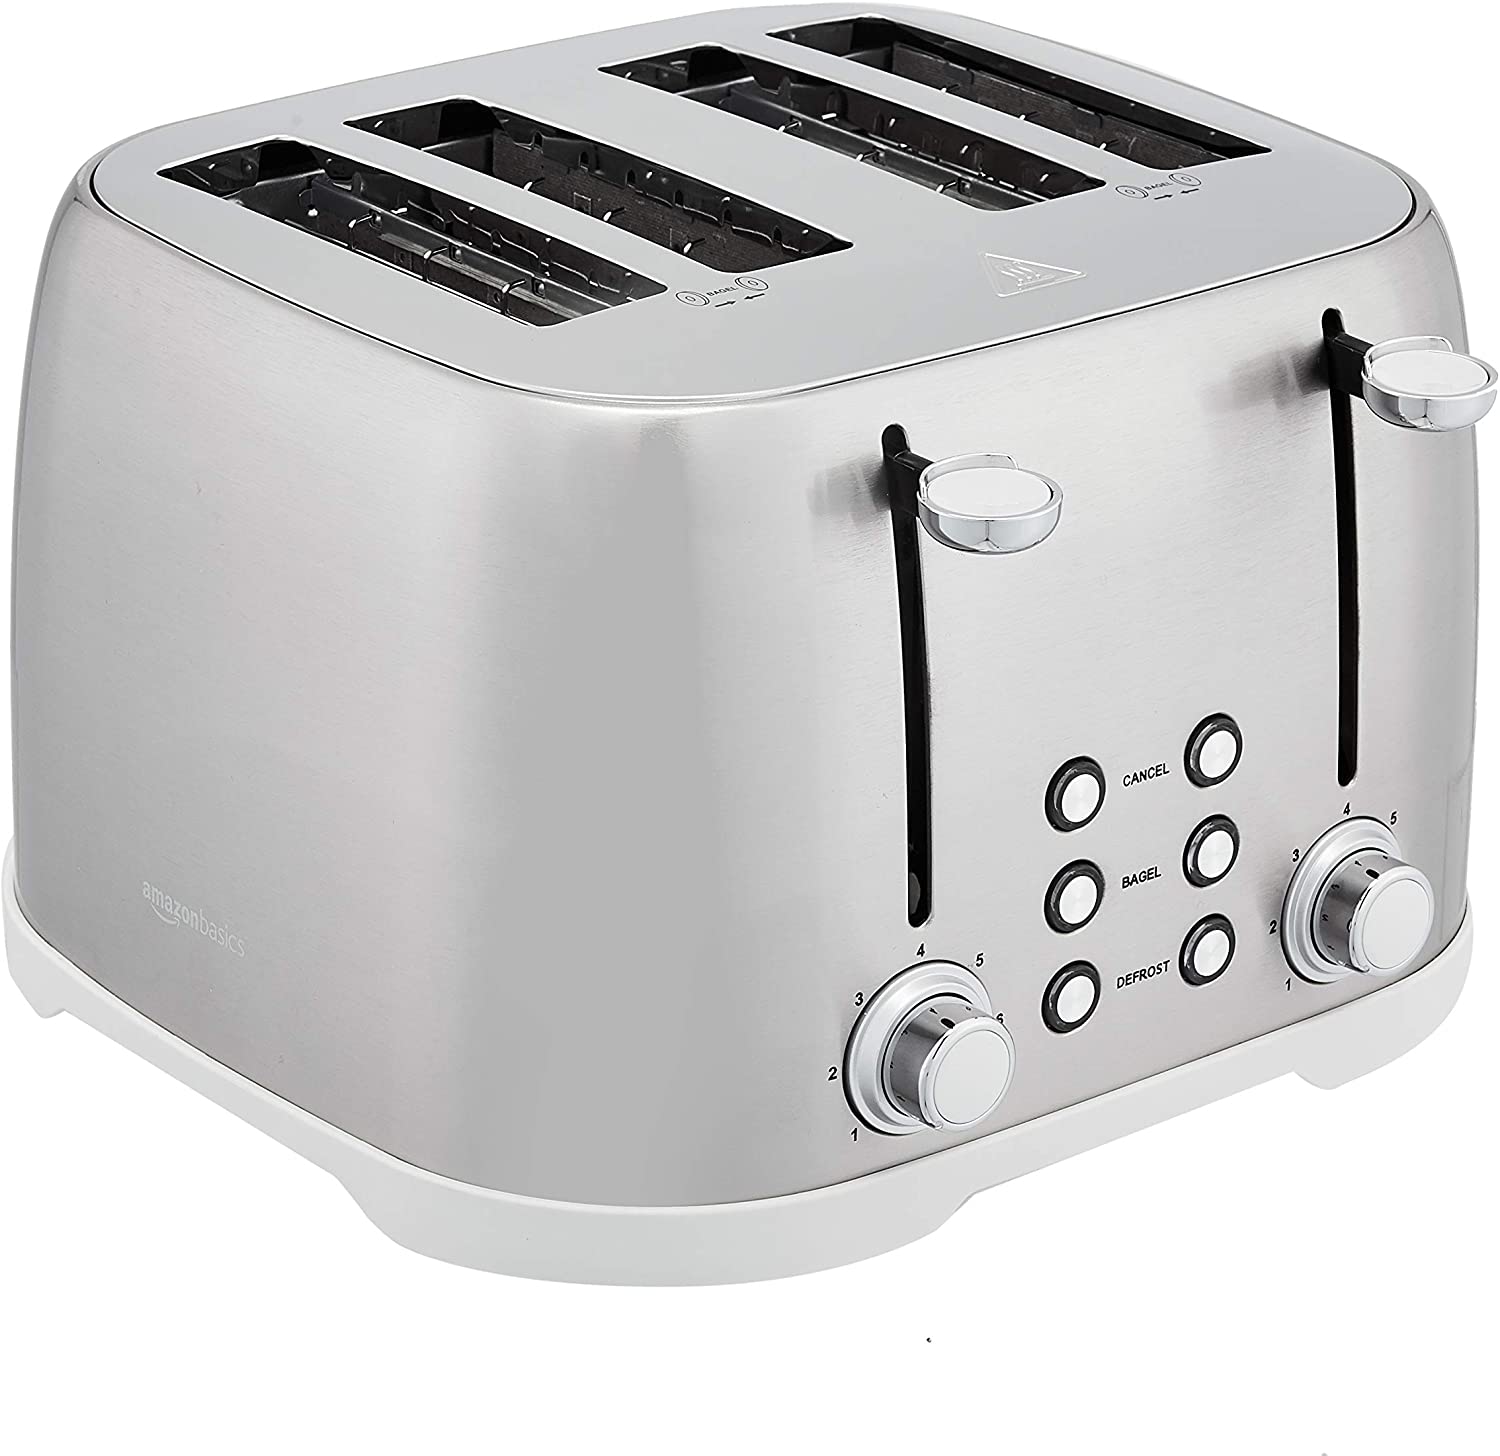 AmazonBasics Easy Clean Toaster, 4-Slice